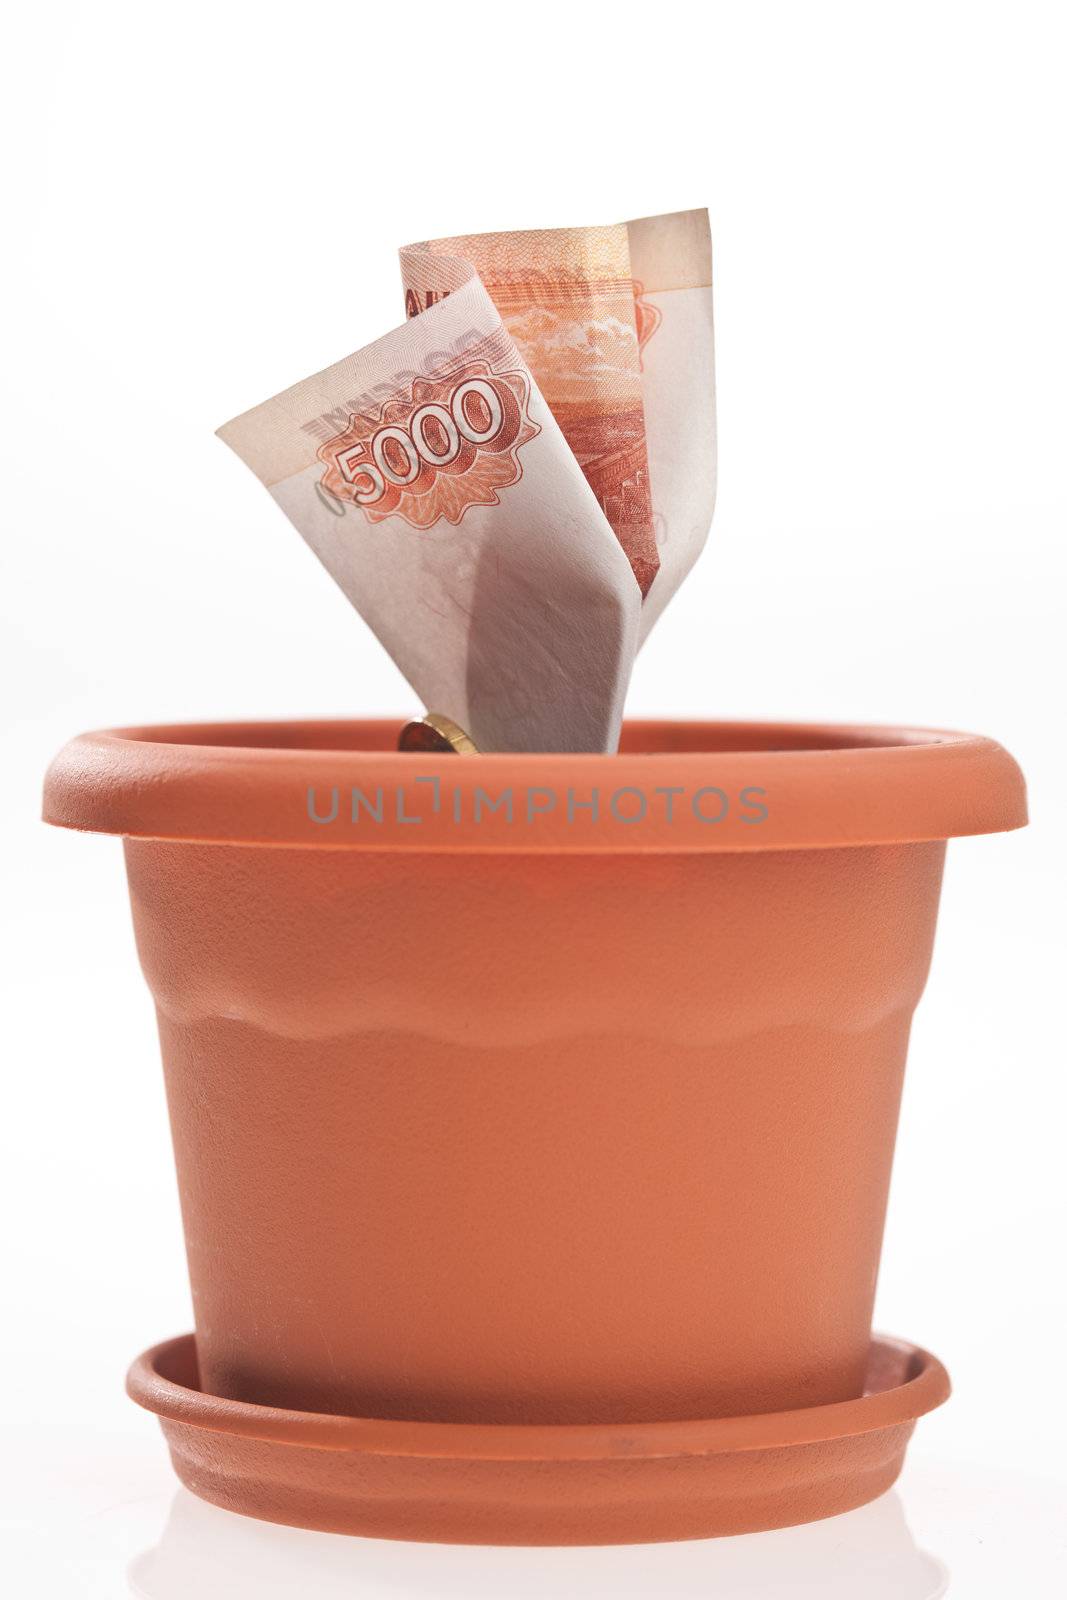 business series: growing money in the flowerpot